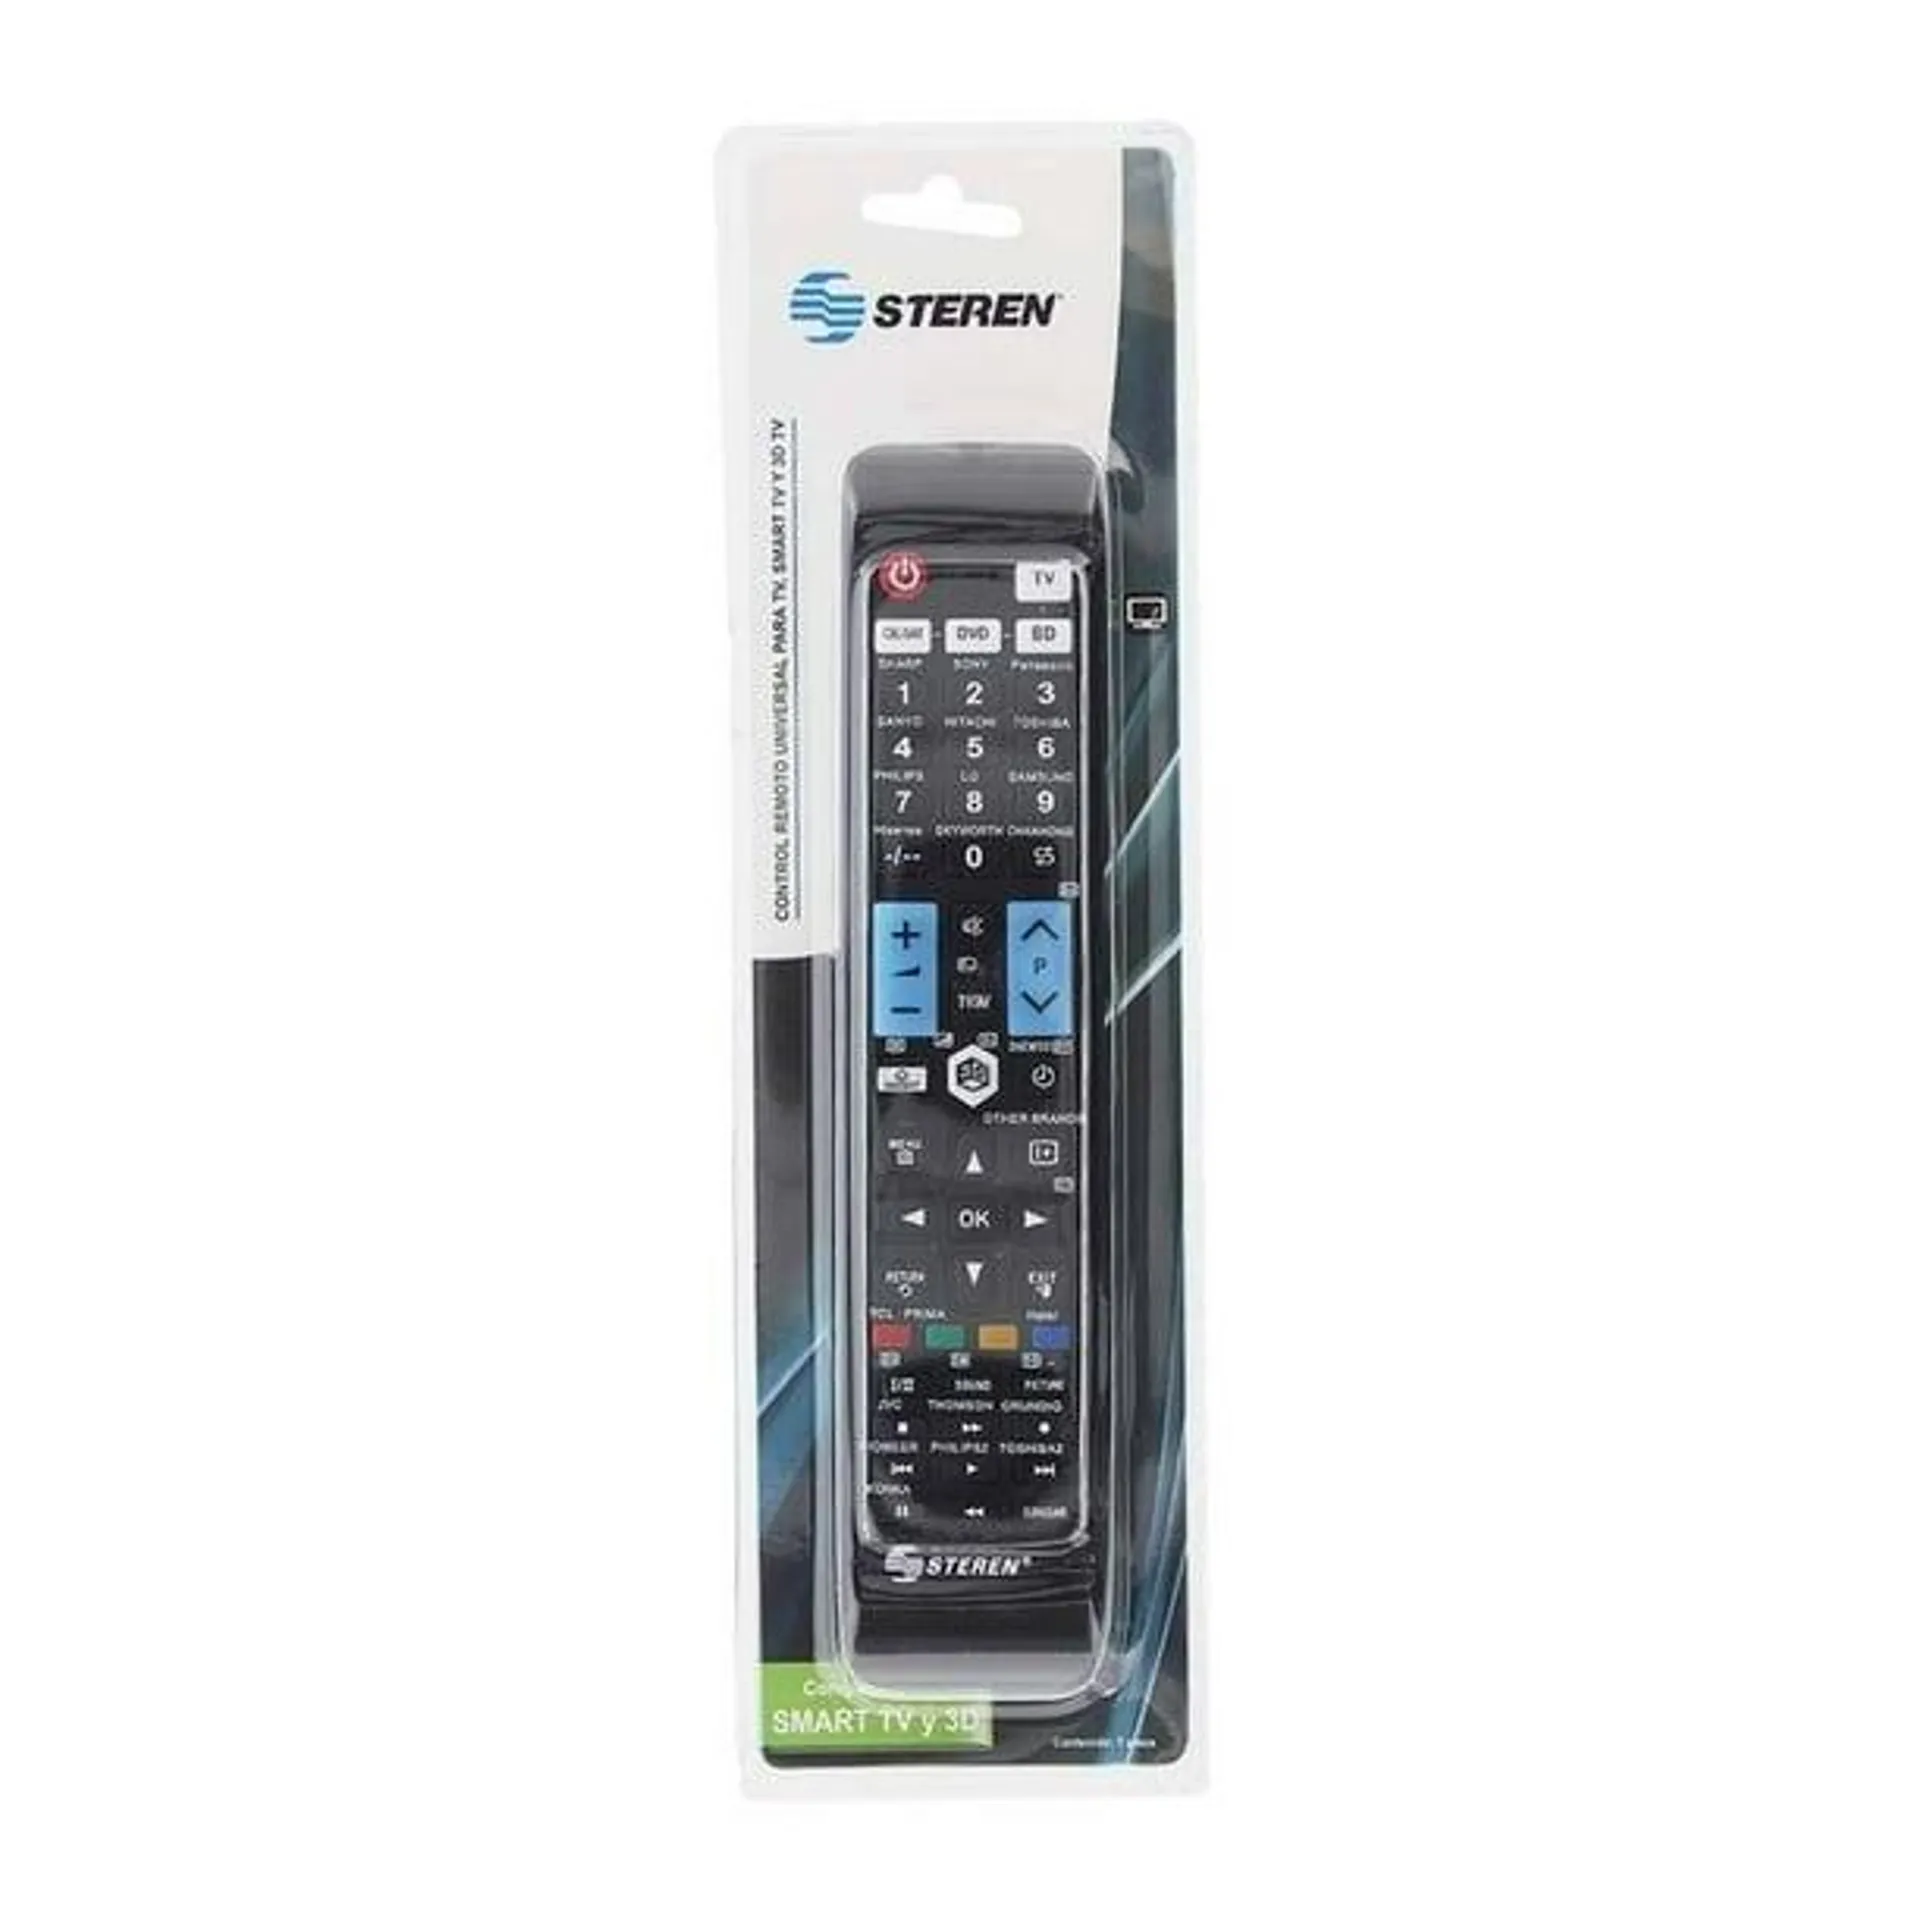 Control Remoto Universal Steren para Smart TV RM-260 Negro modelo RM-260